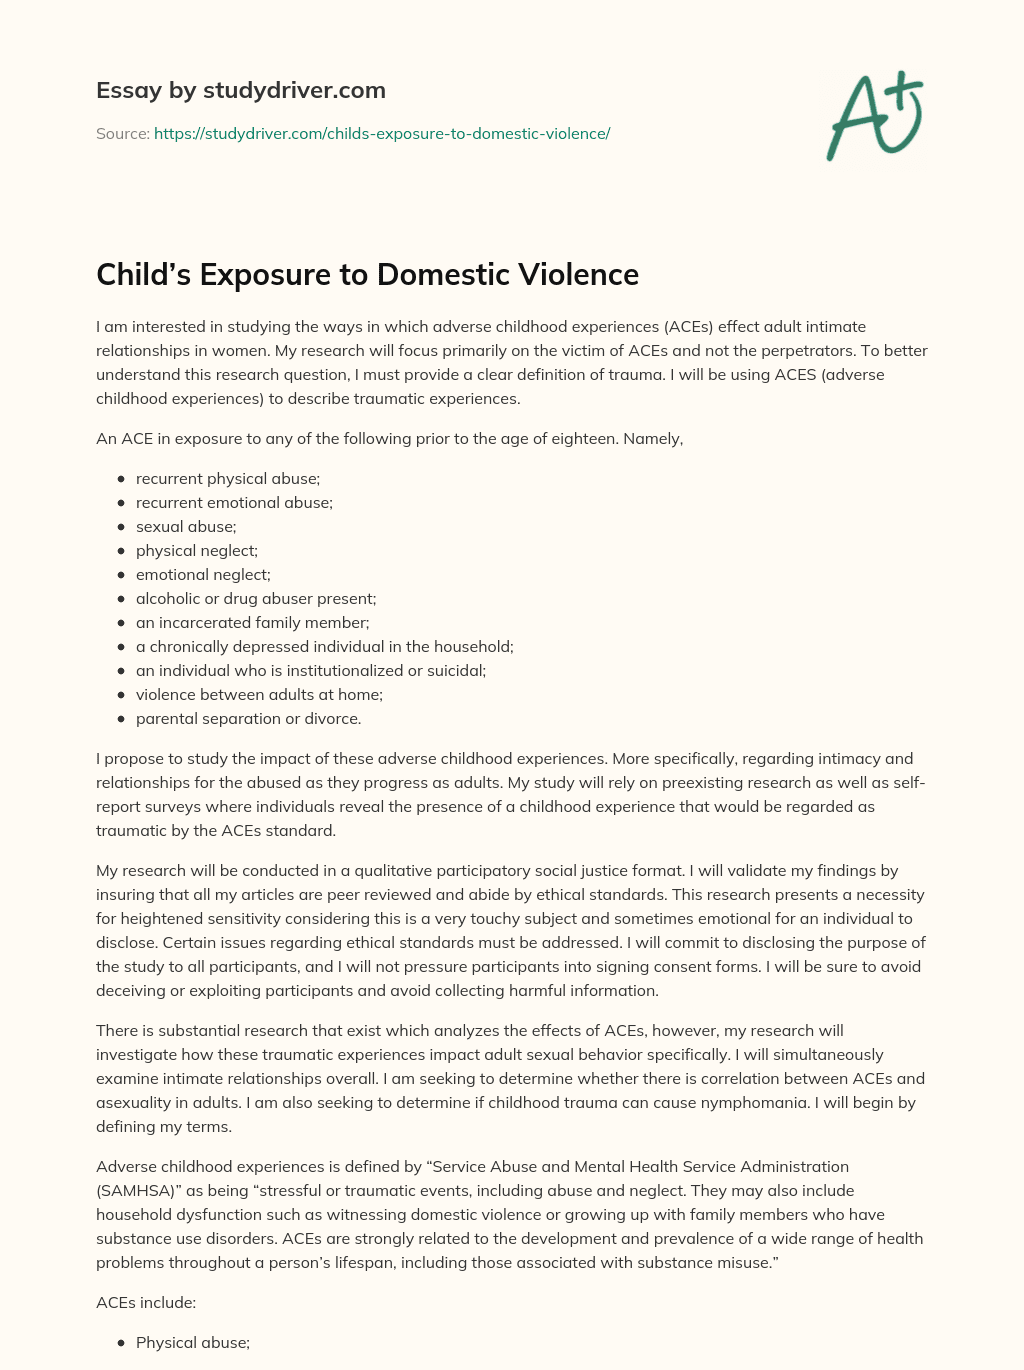 Child’s Exposure to Domestic Violence essay